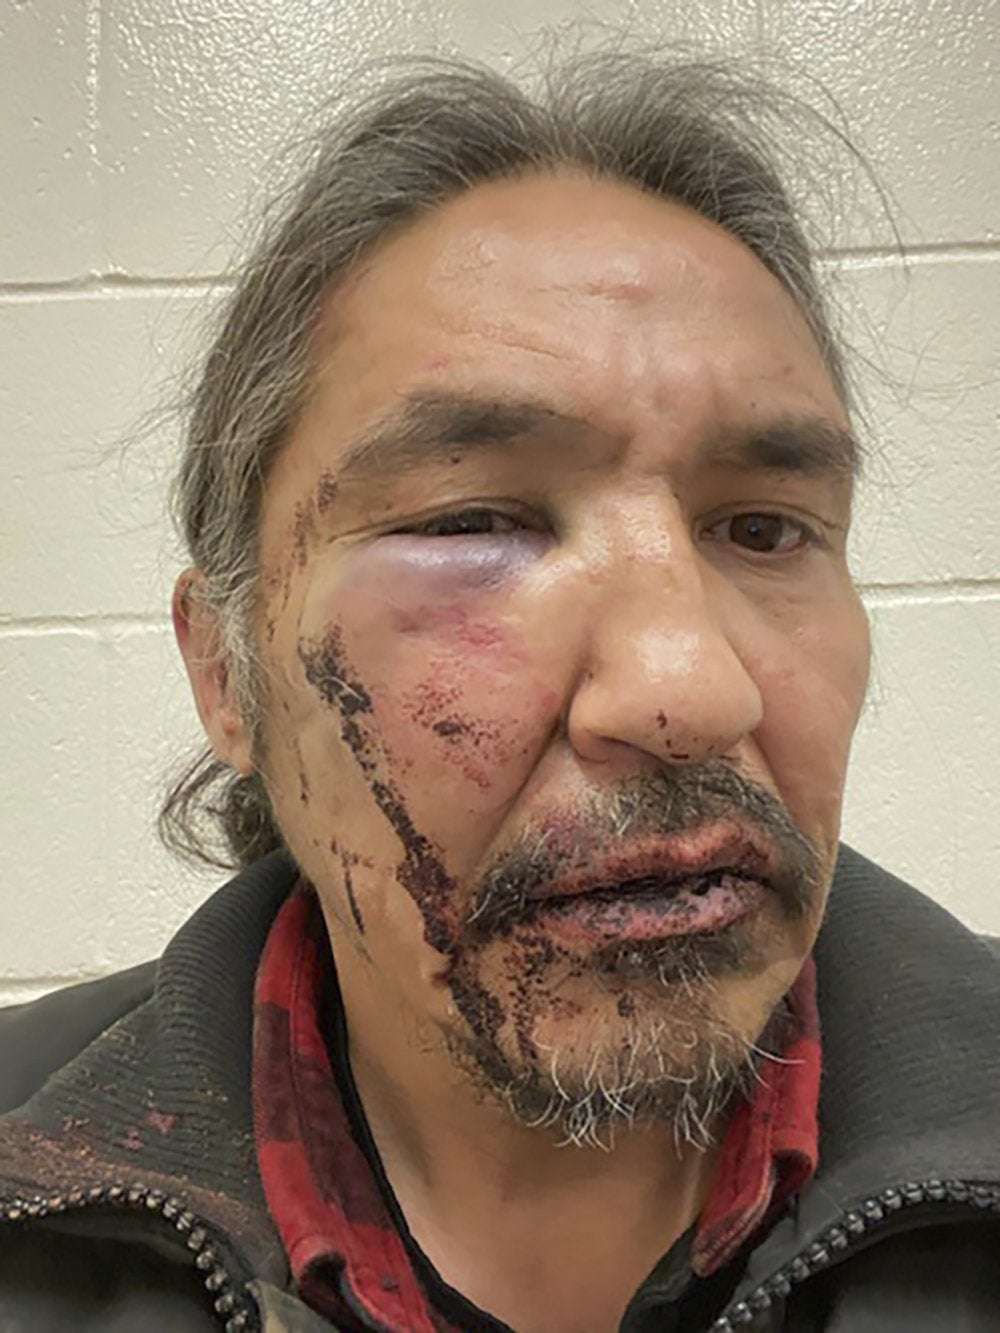 image for Trudeau: police video of aboriginal chief arrest shocking